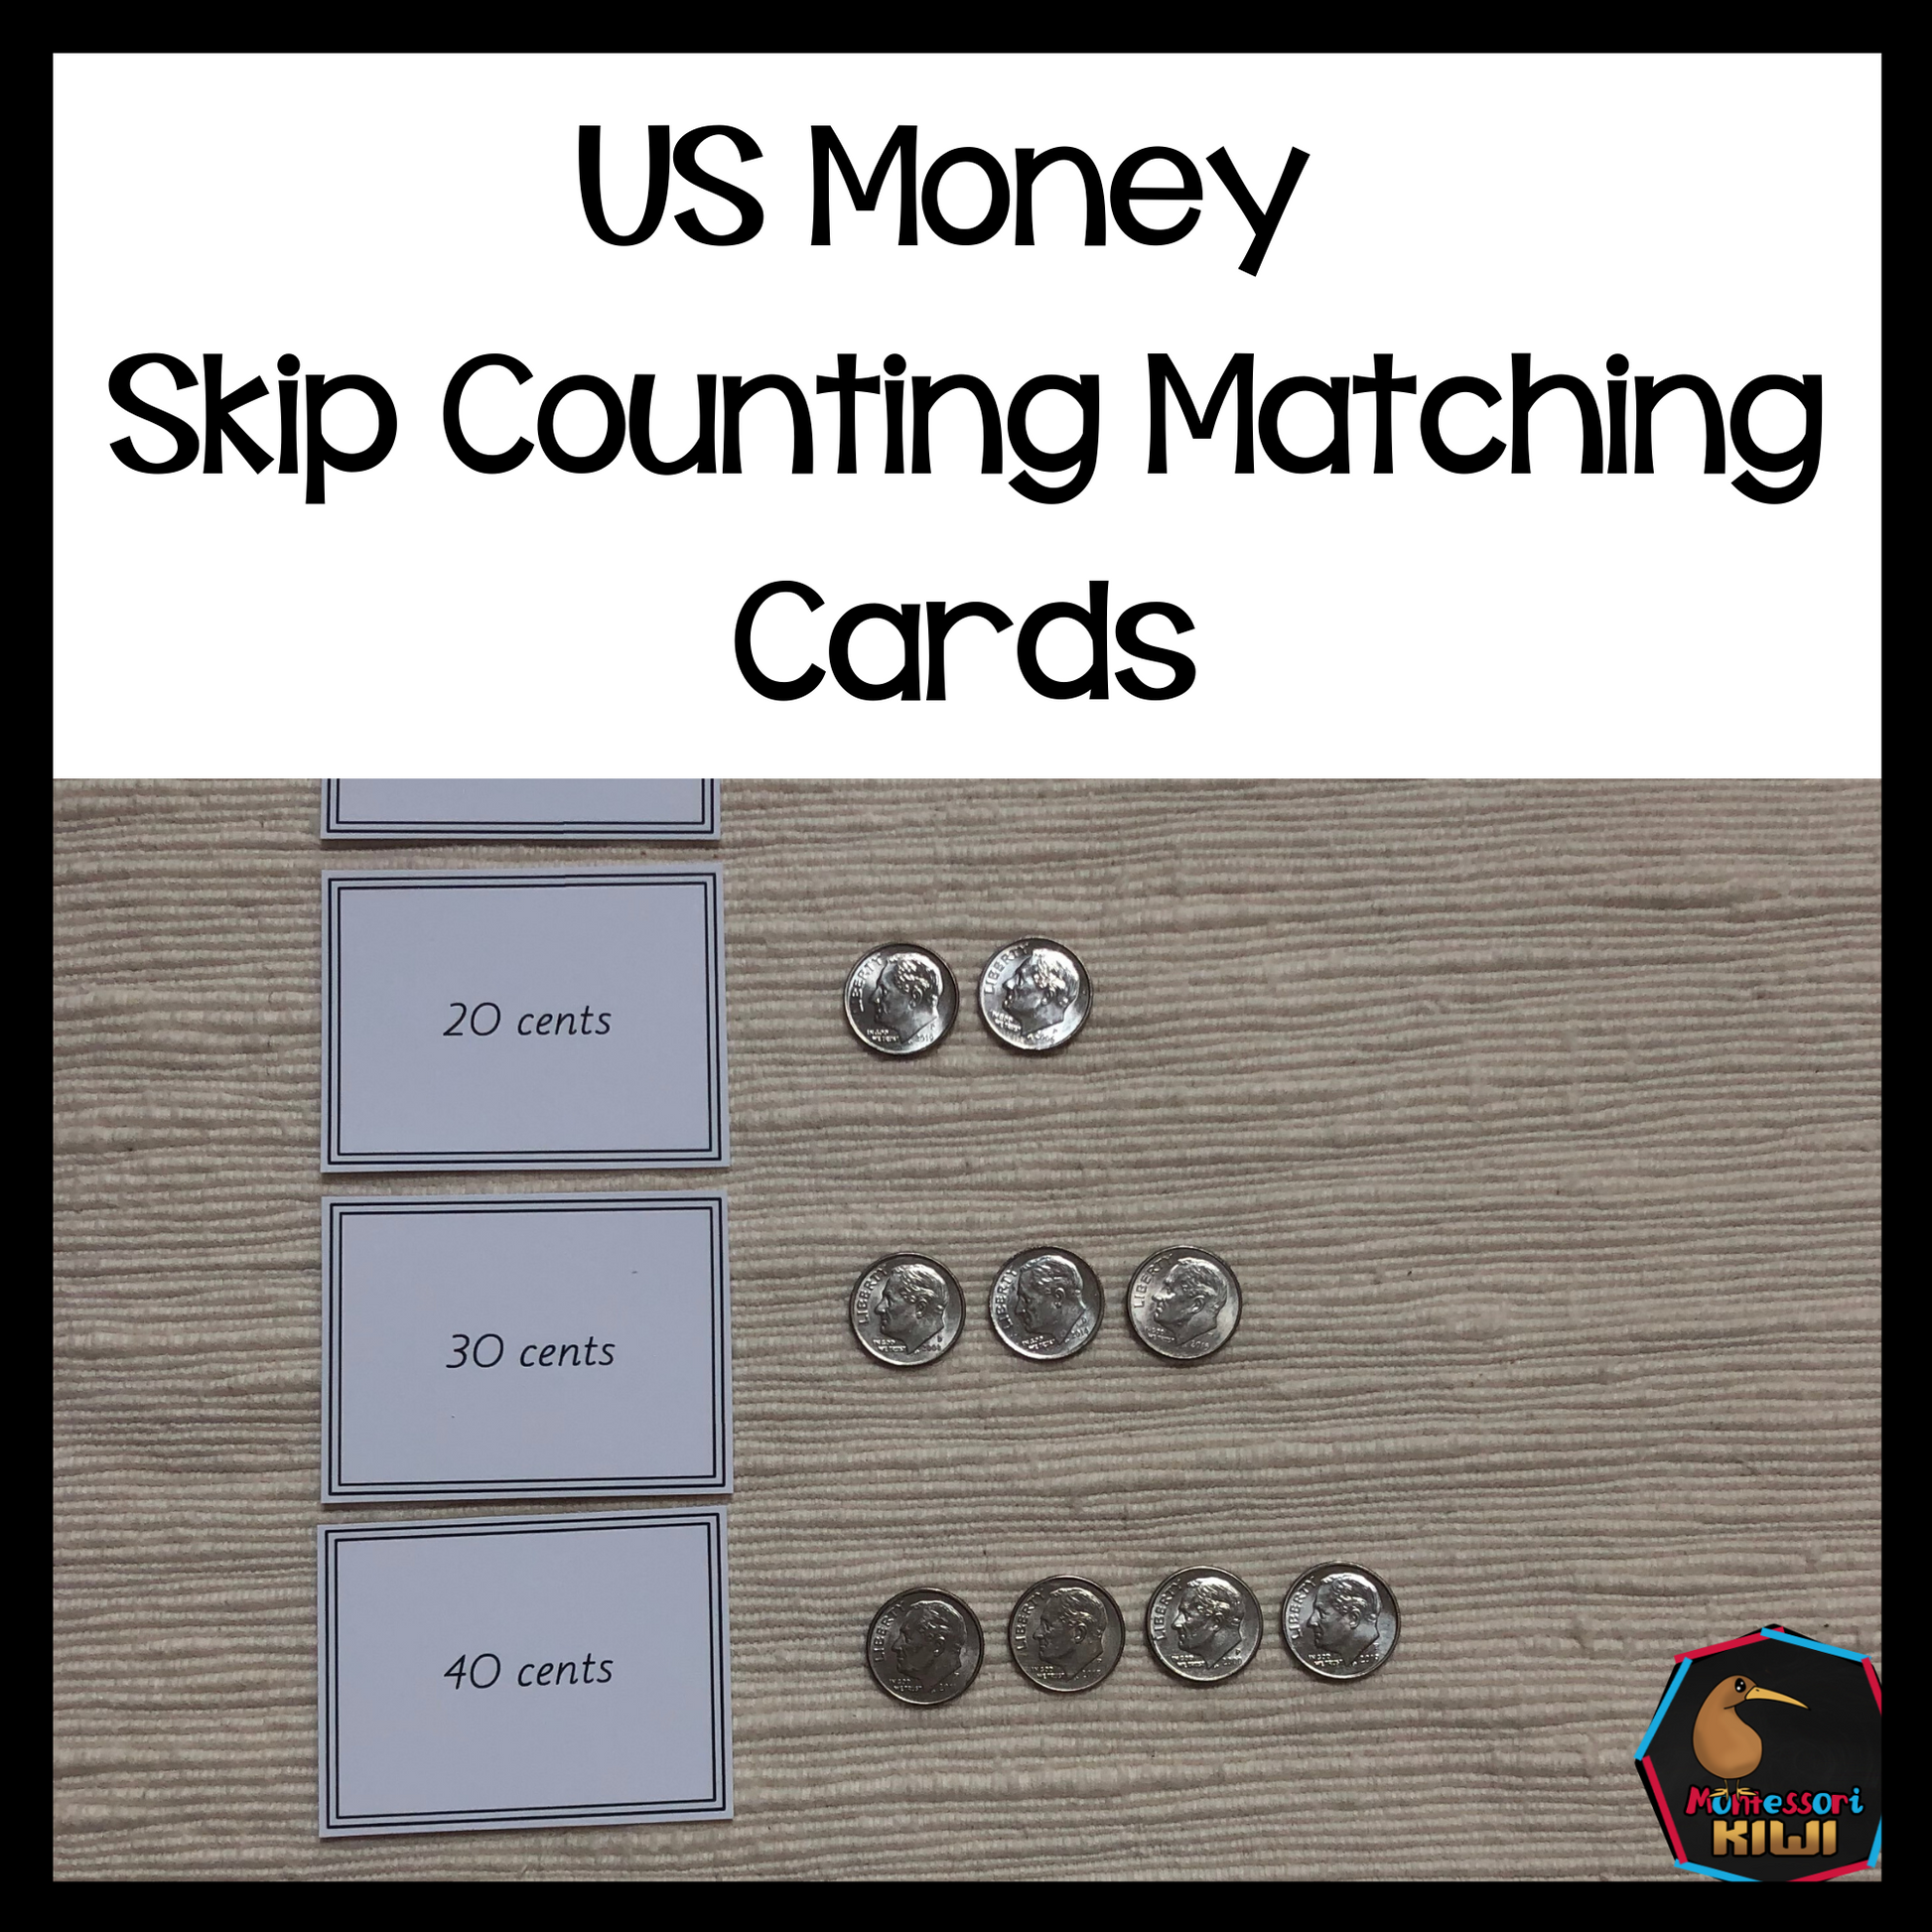 US Money Skip Counting Matching Cards - montessorikiwi